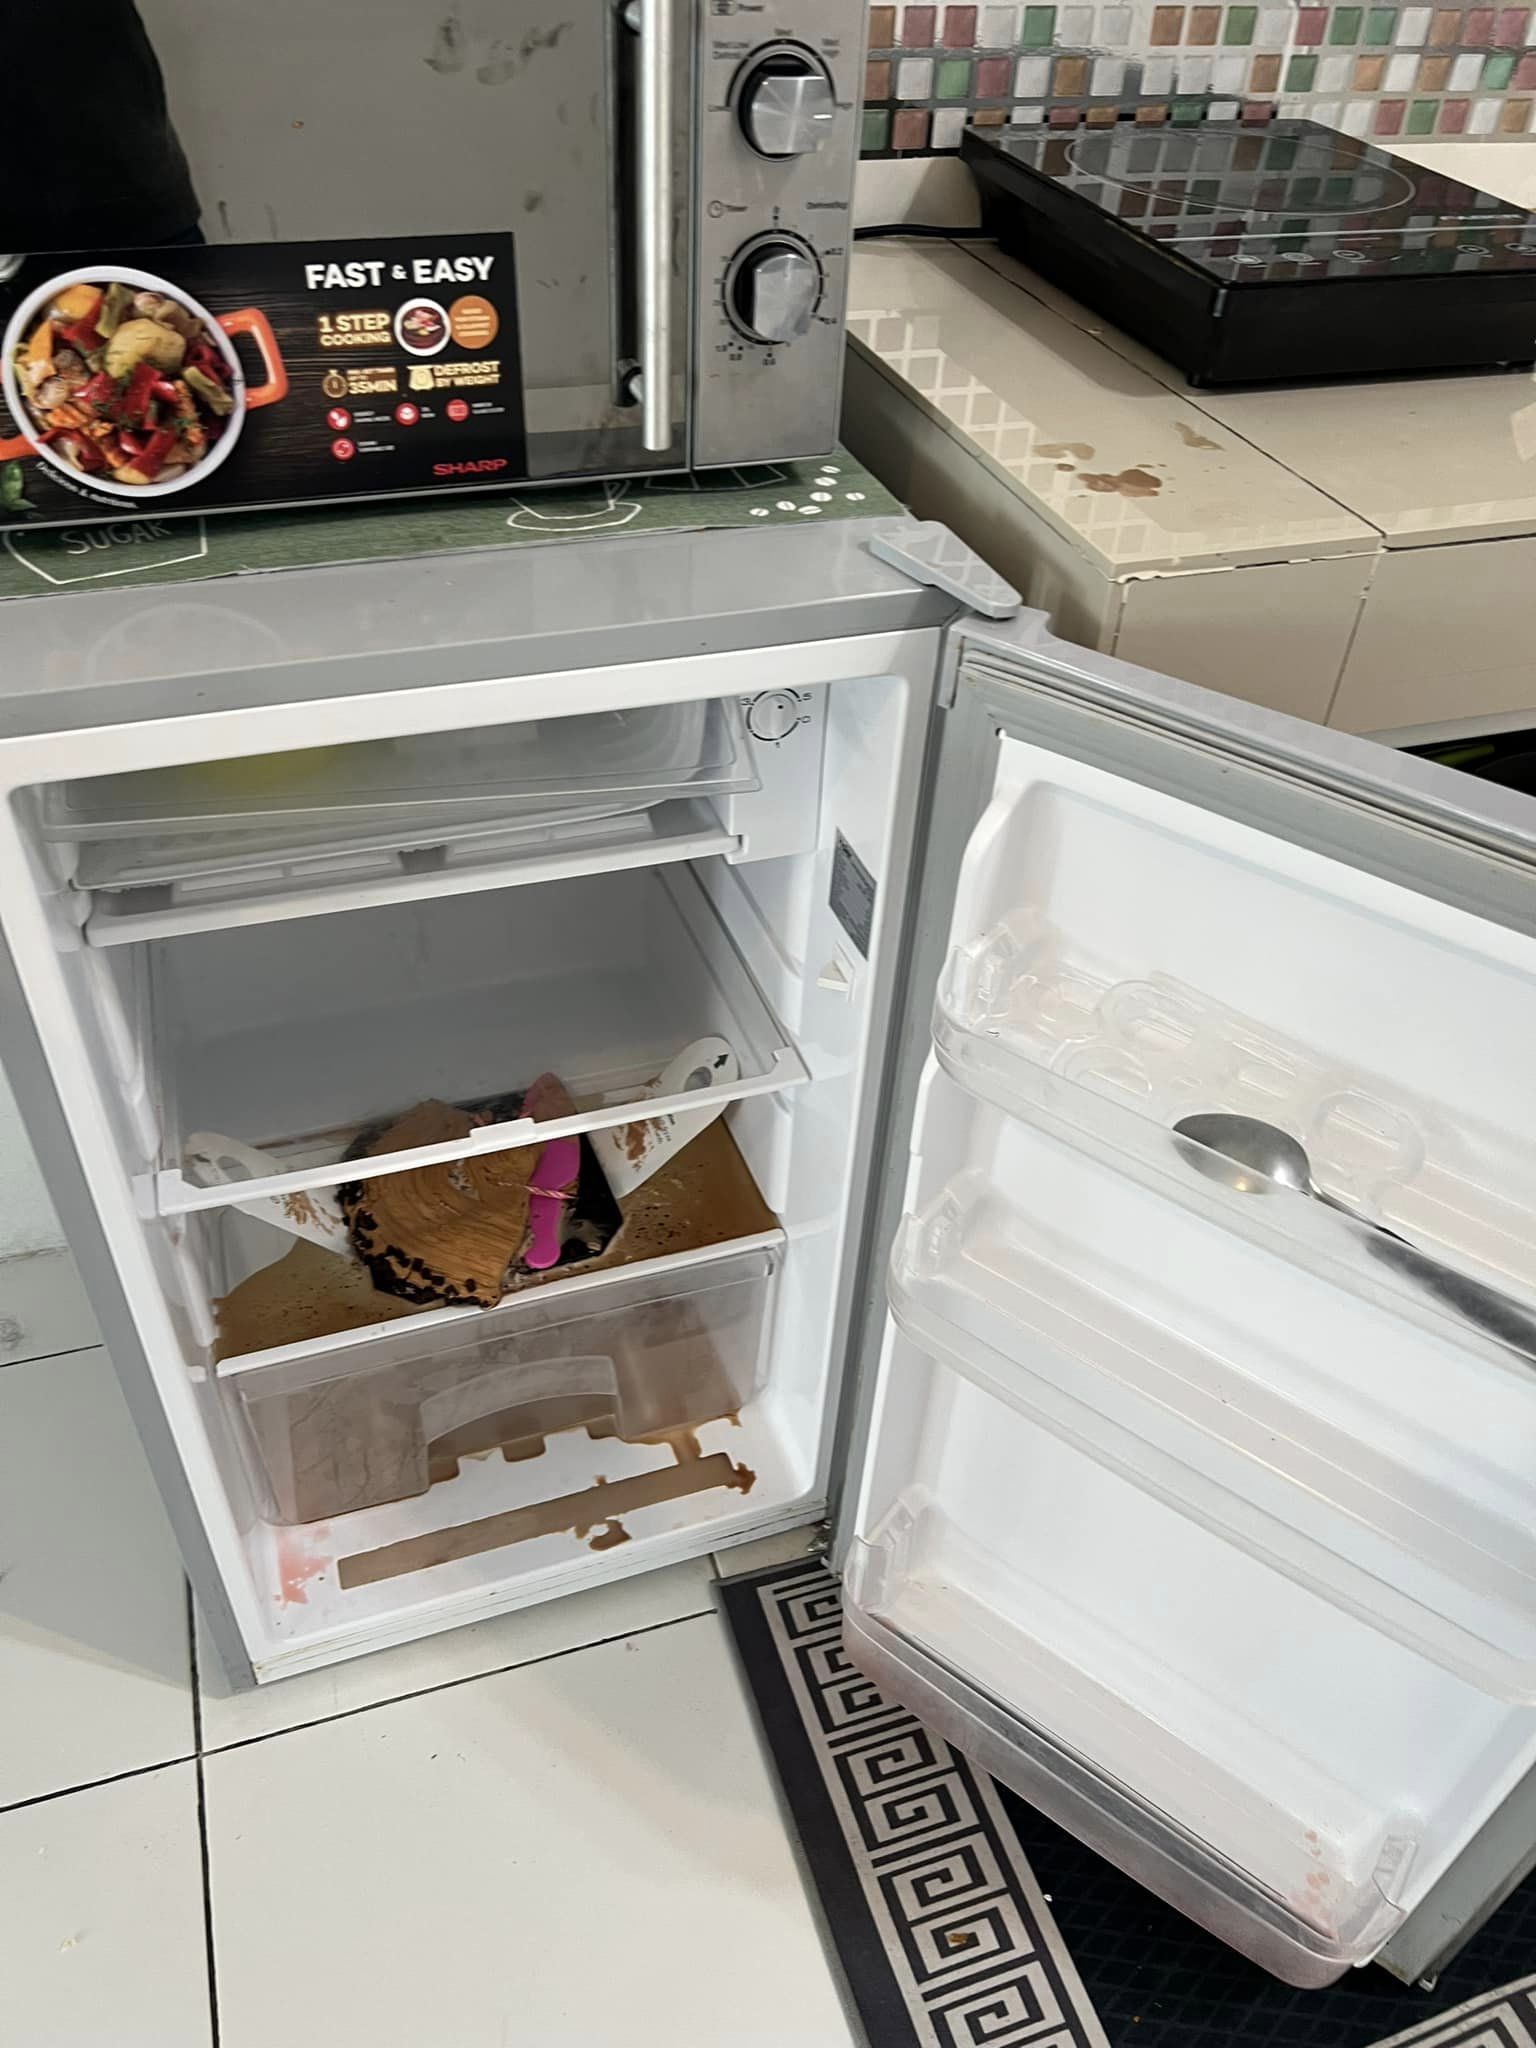 Messy fridge